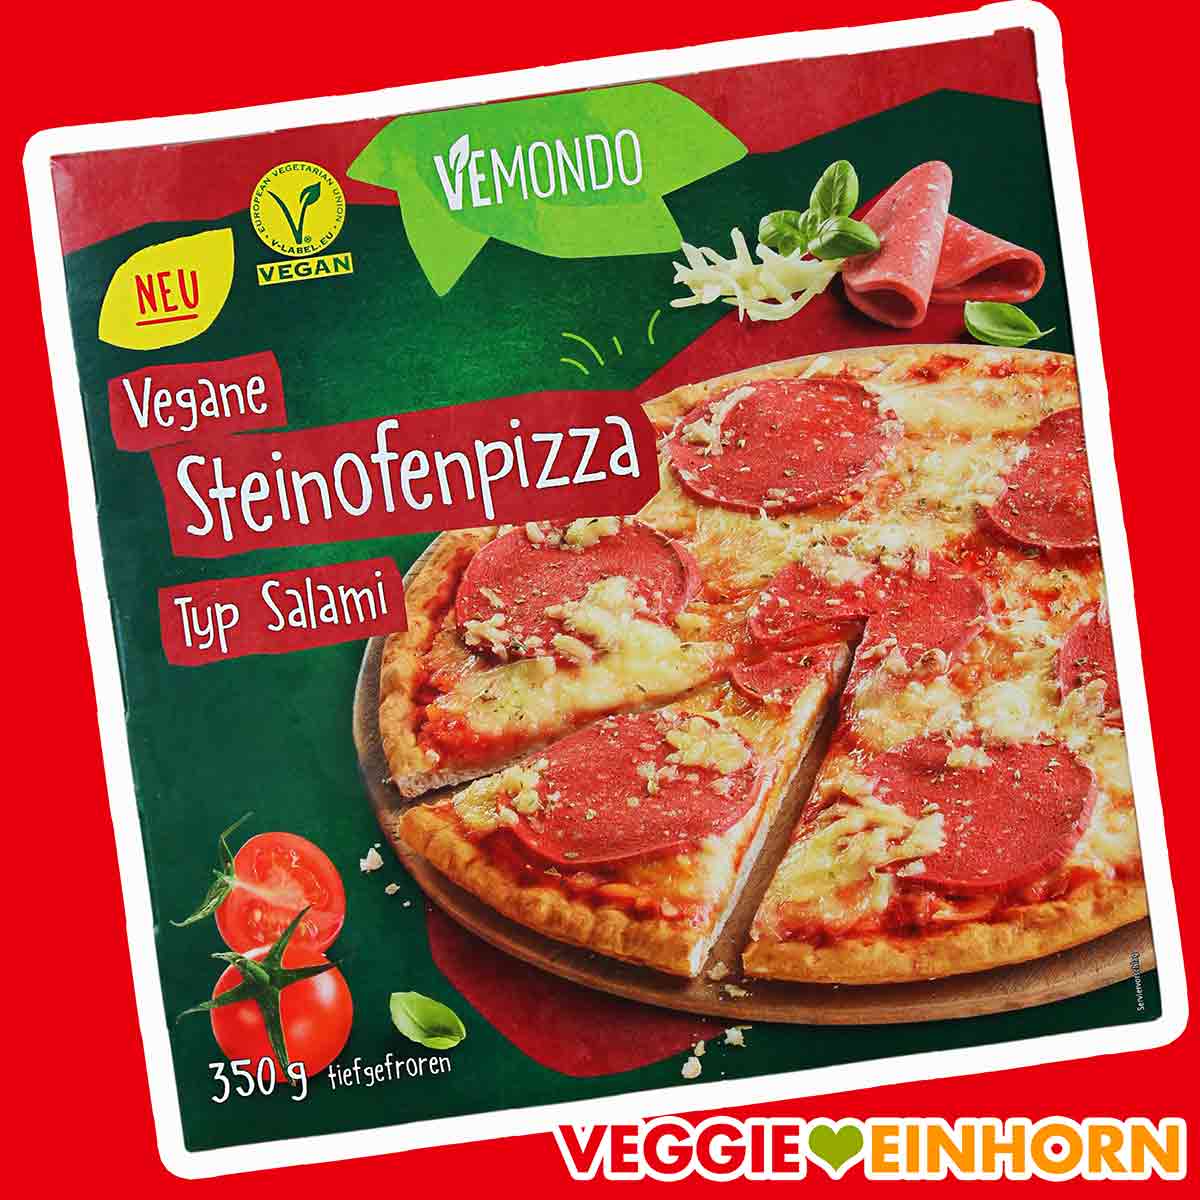 Vegane Pizza Salami von Lidl